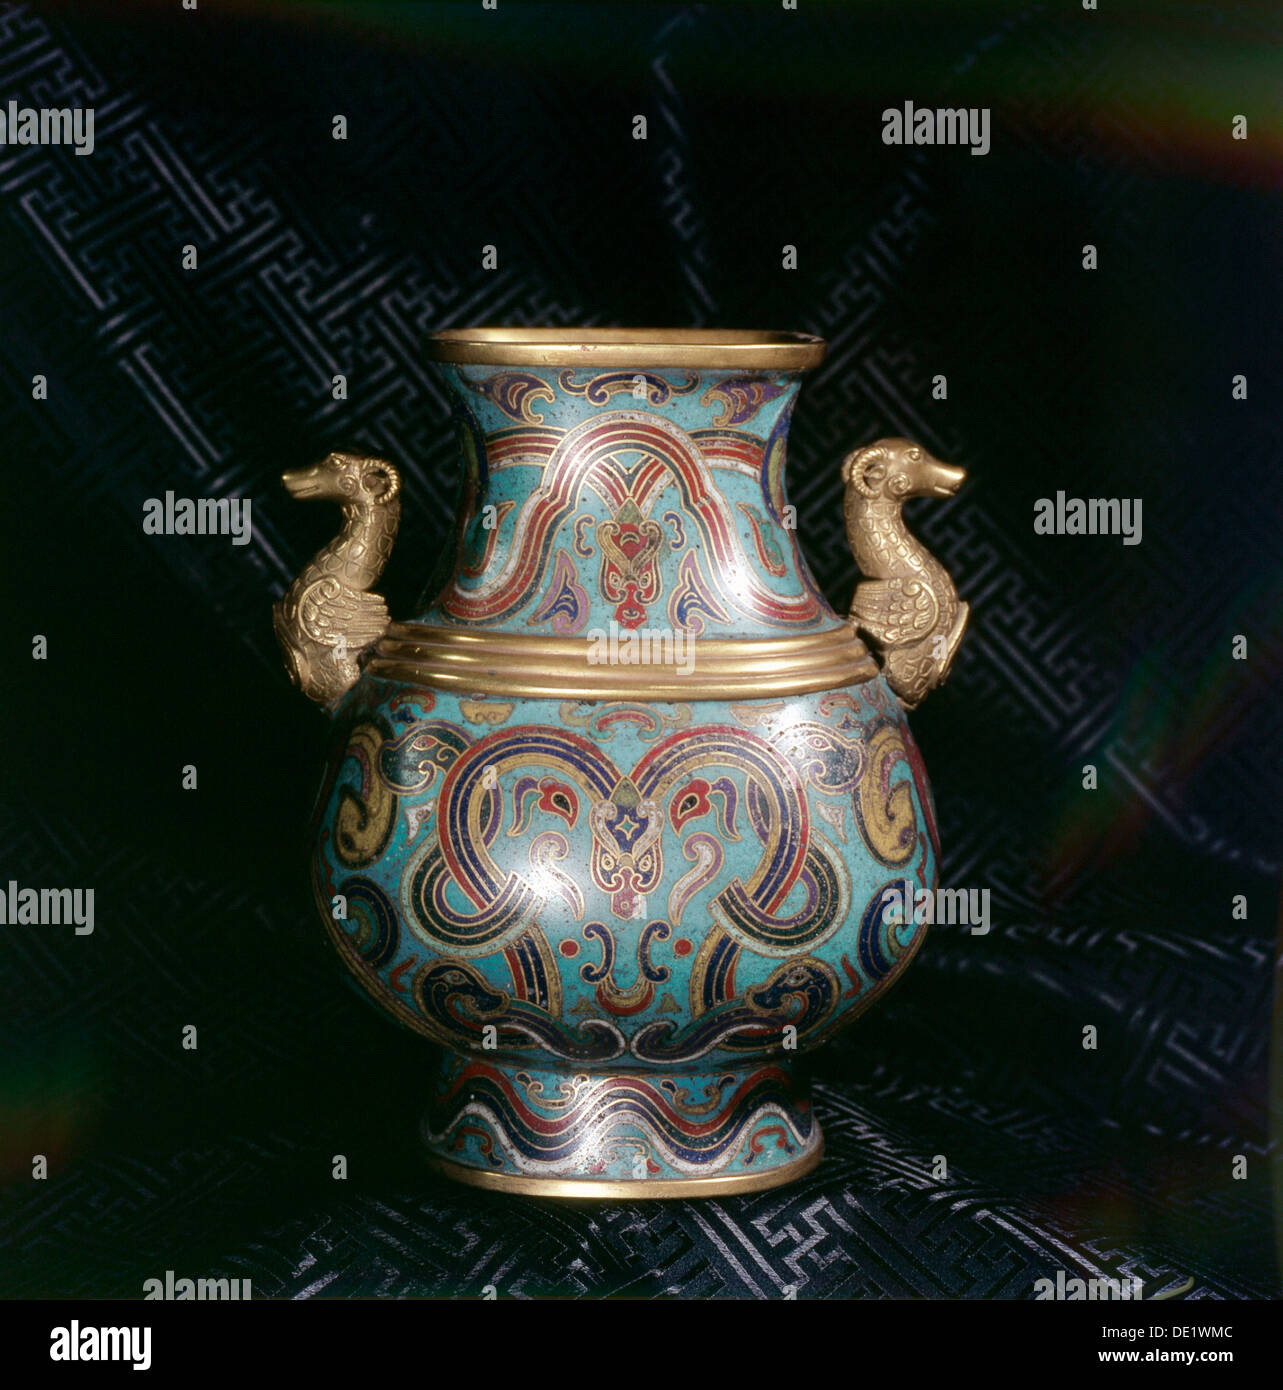 Cloisonne enamel vessel with similar shape to archaic ritual bronze vessels. Stock Photo